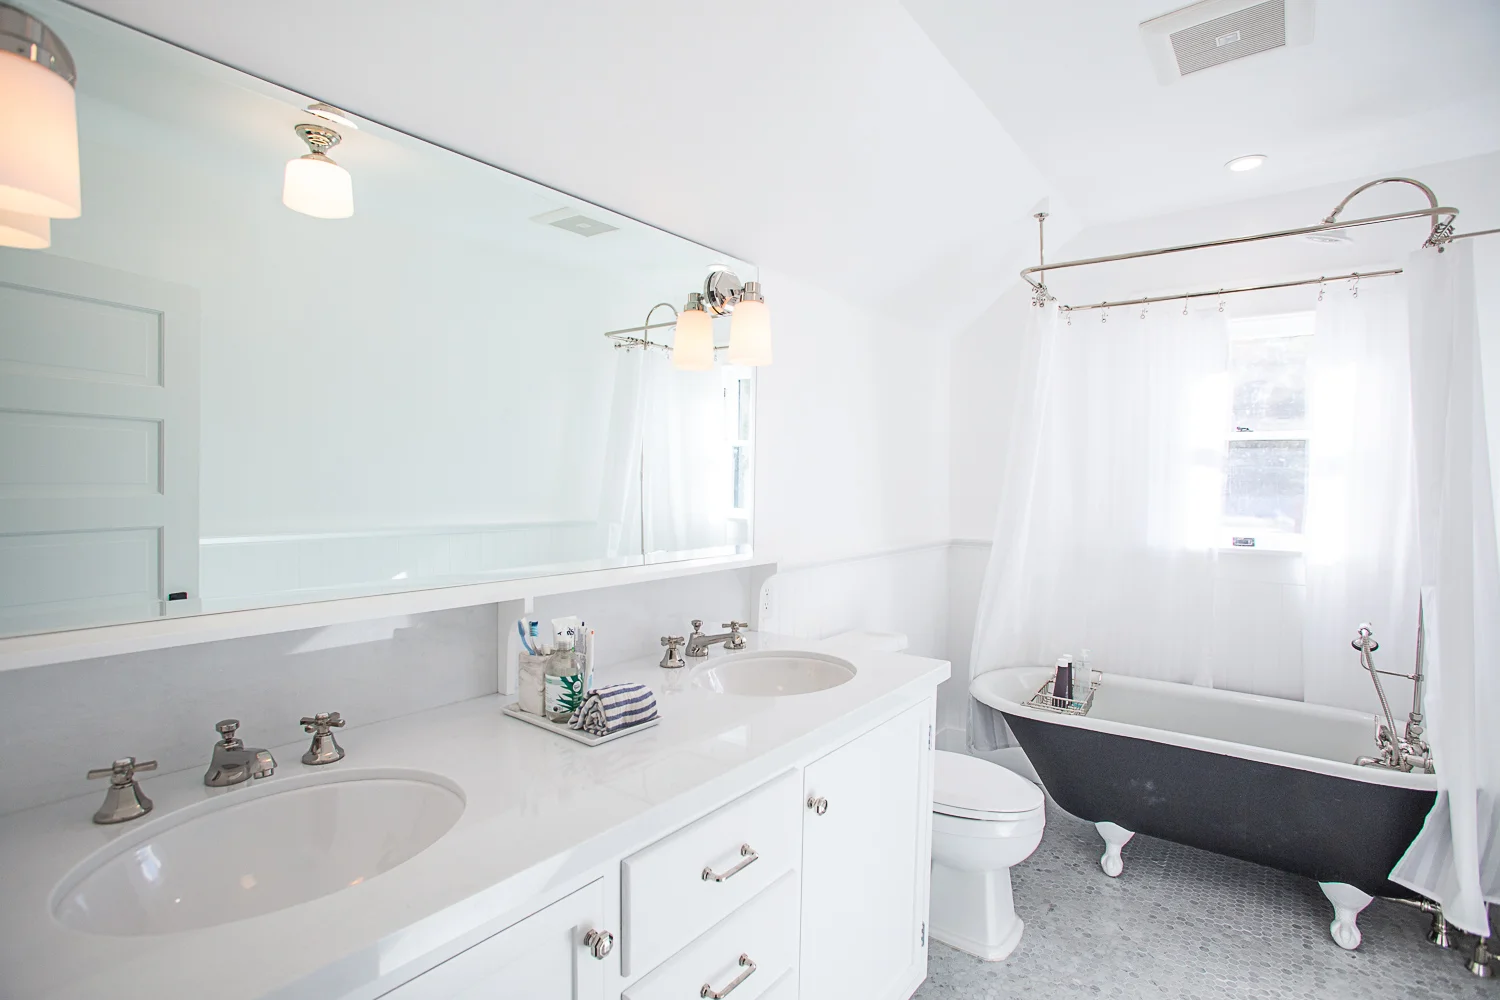 White double vanity bathroom with tiled floors.